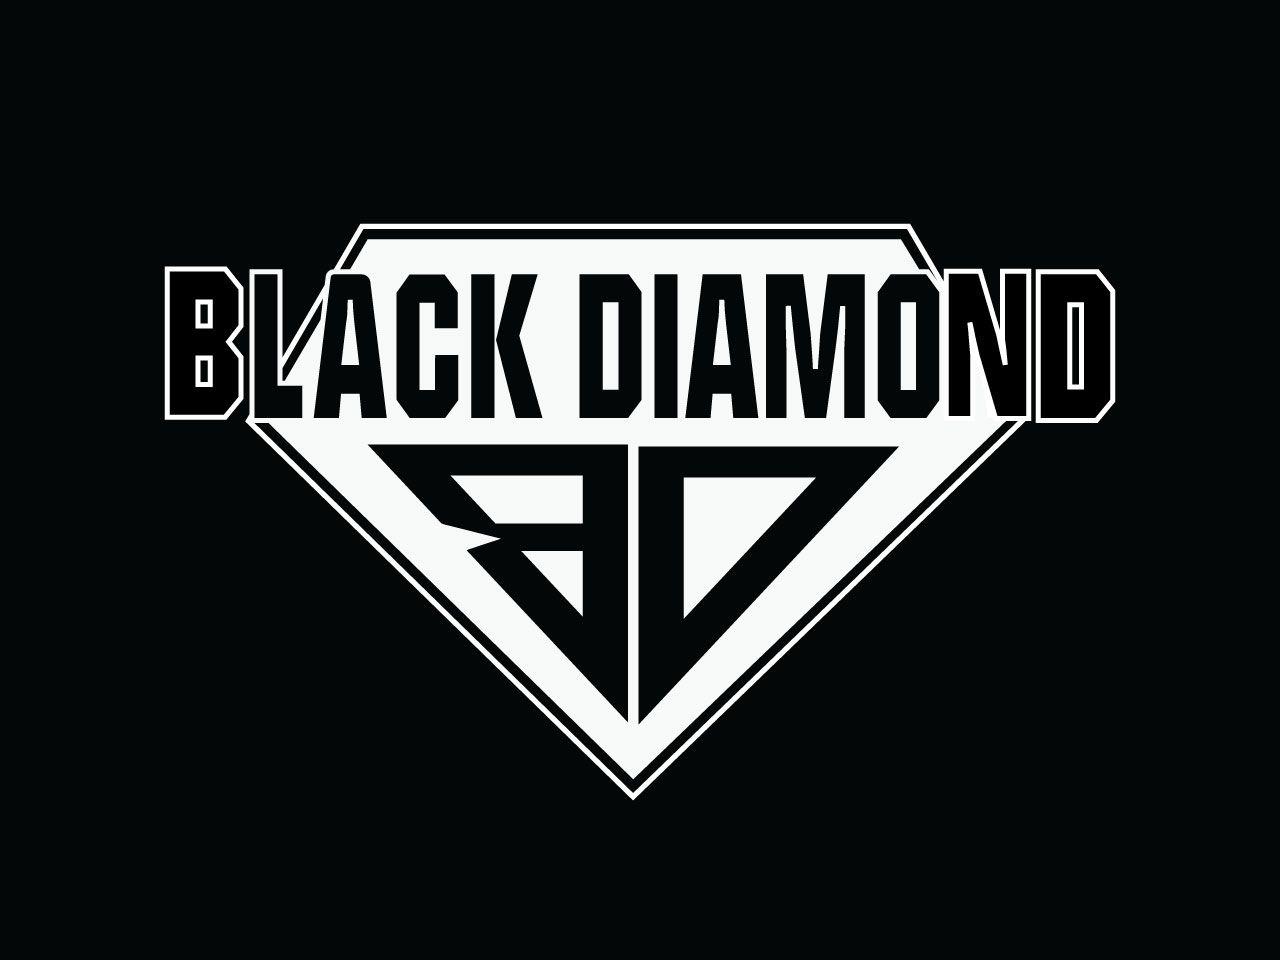 Diamond Clothing Brand Logo - Black Diamond clothing store logo by Afzal uz zaman Shaju | Dribbble ...